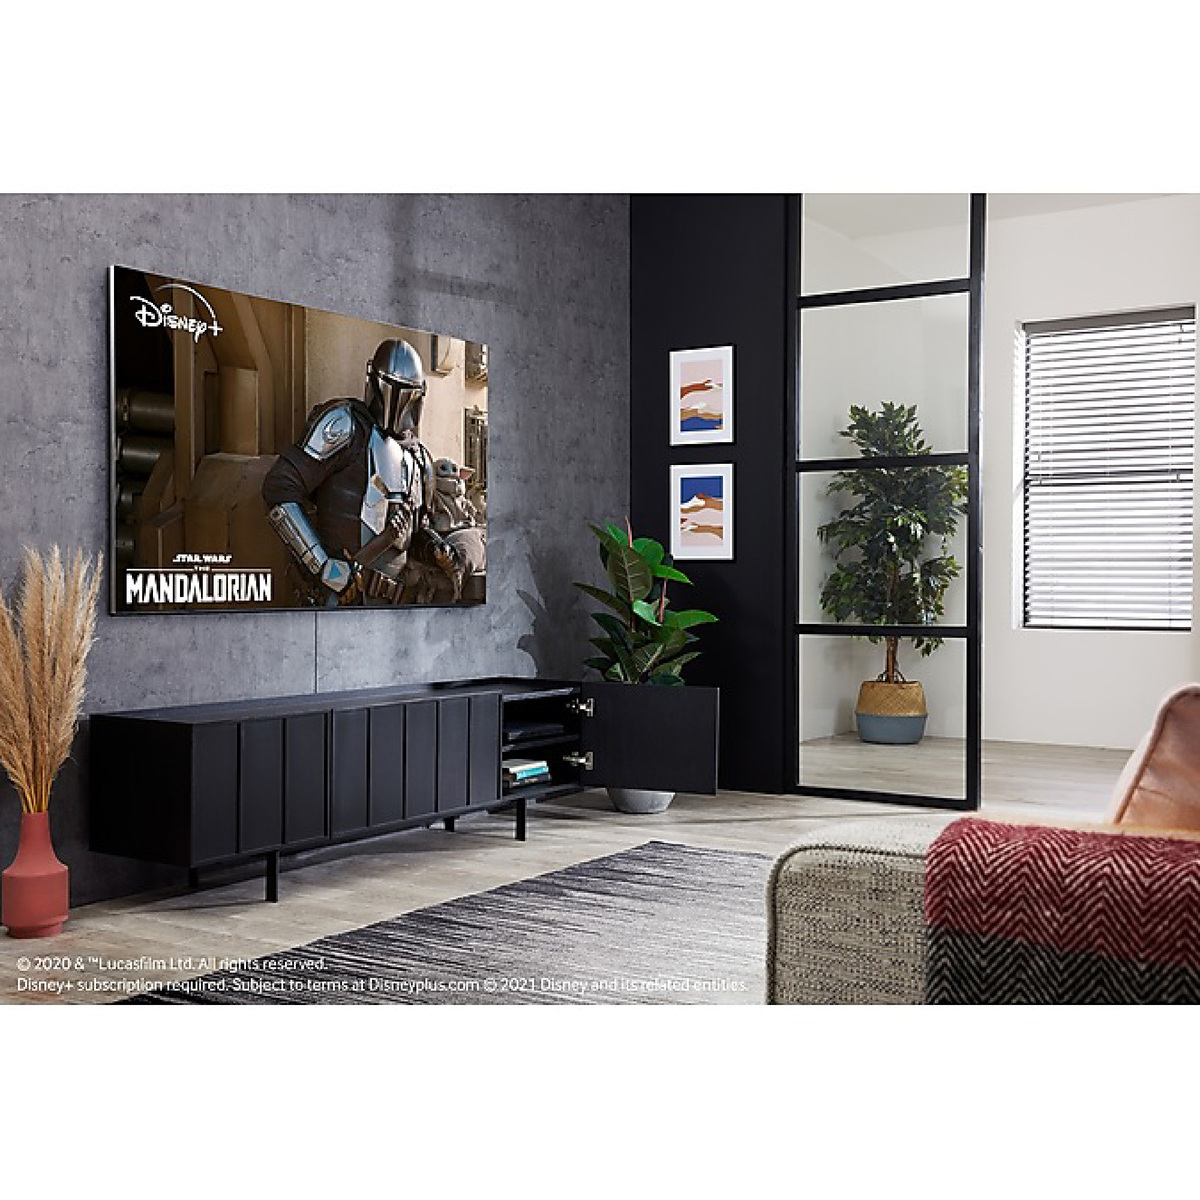 Samsung NEO QLED 8K HDR Smart TV QA75QN900AUXZ 75" (2021)